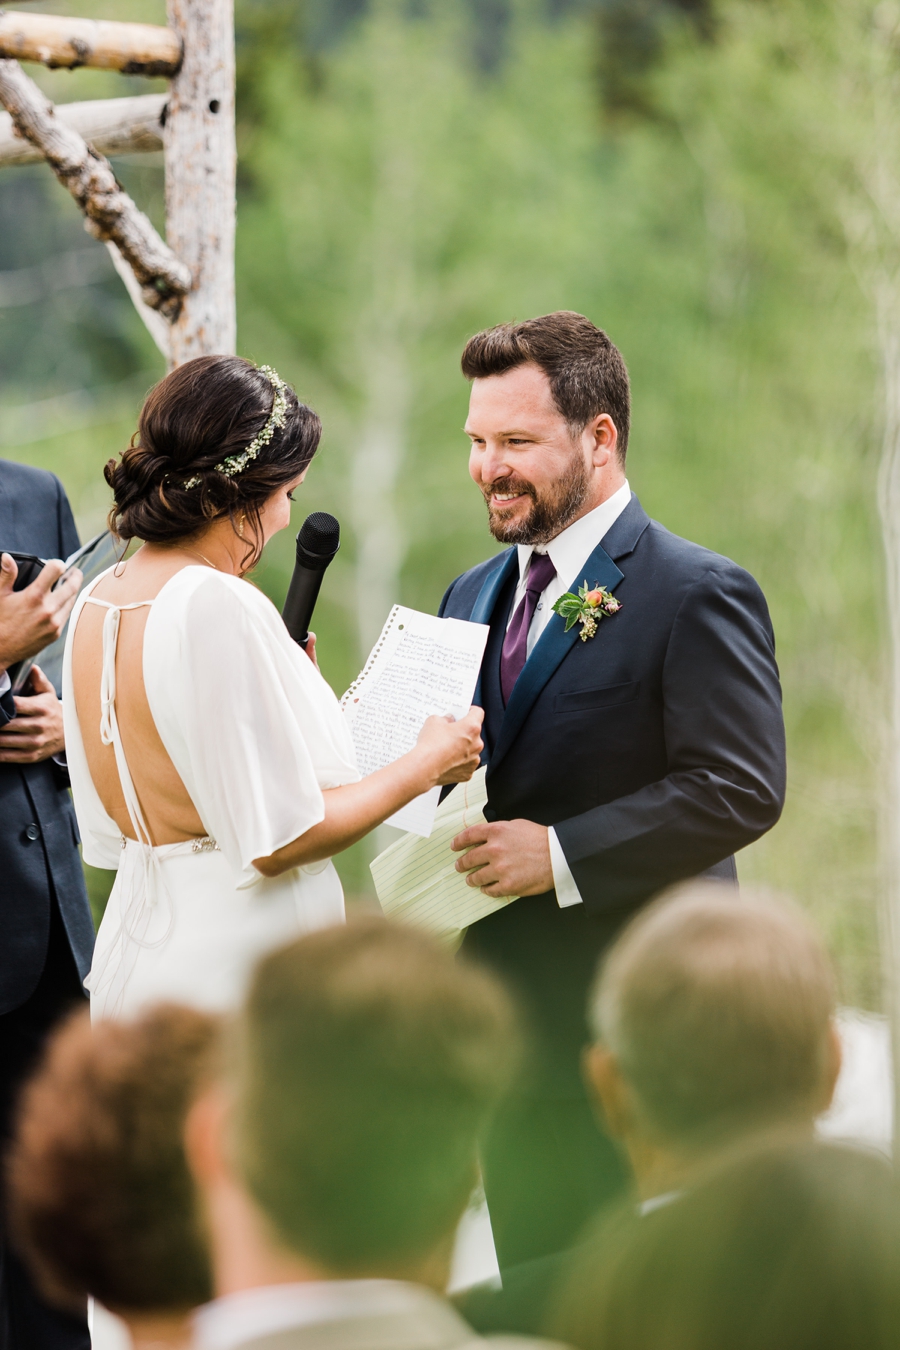 Wedding ceremony at Grand Targhee Resort in Jackson Hole by mountain wedding photographer Amy Galbraith